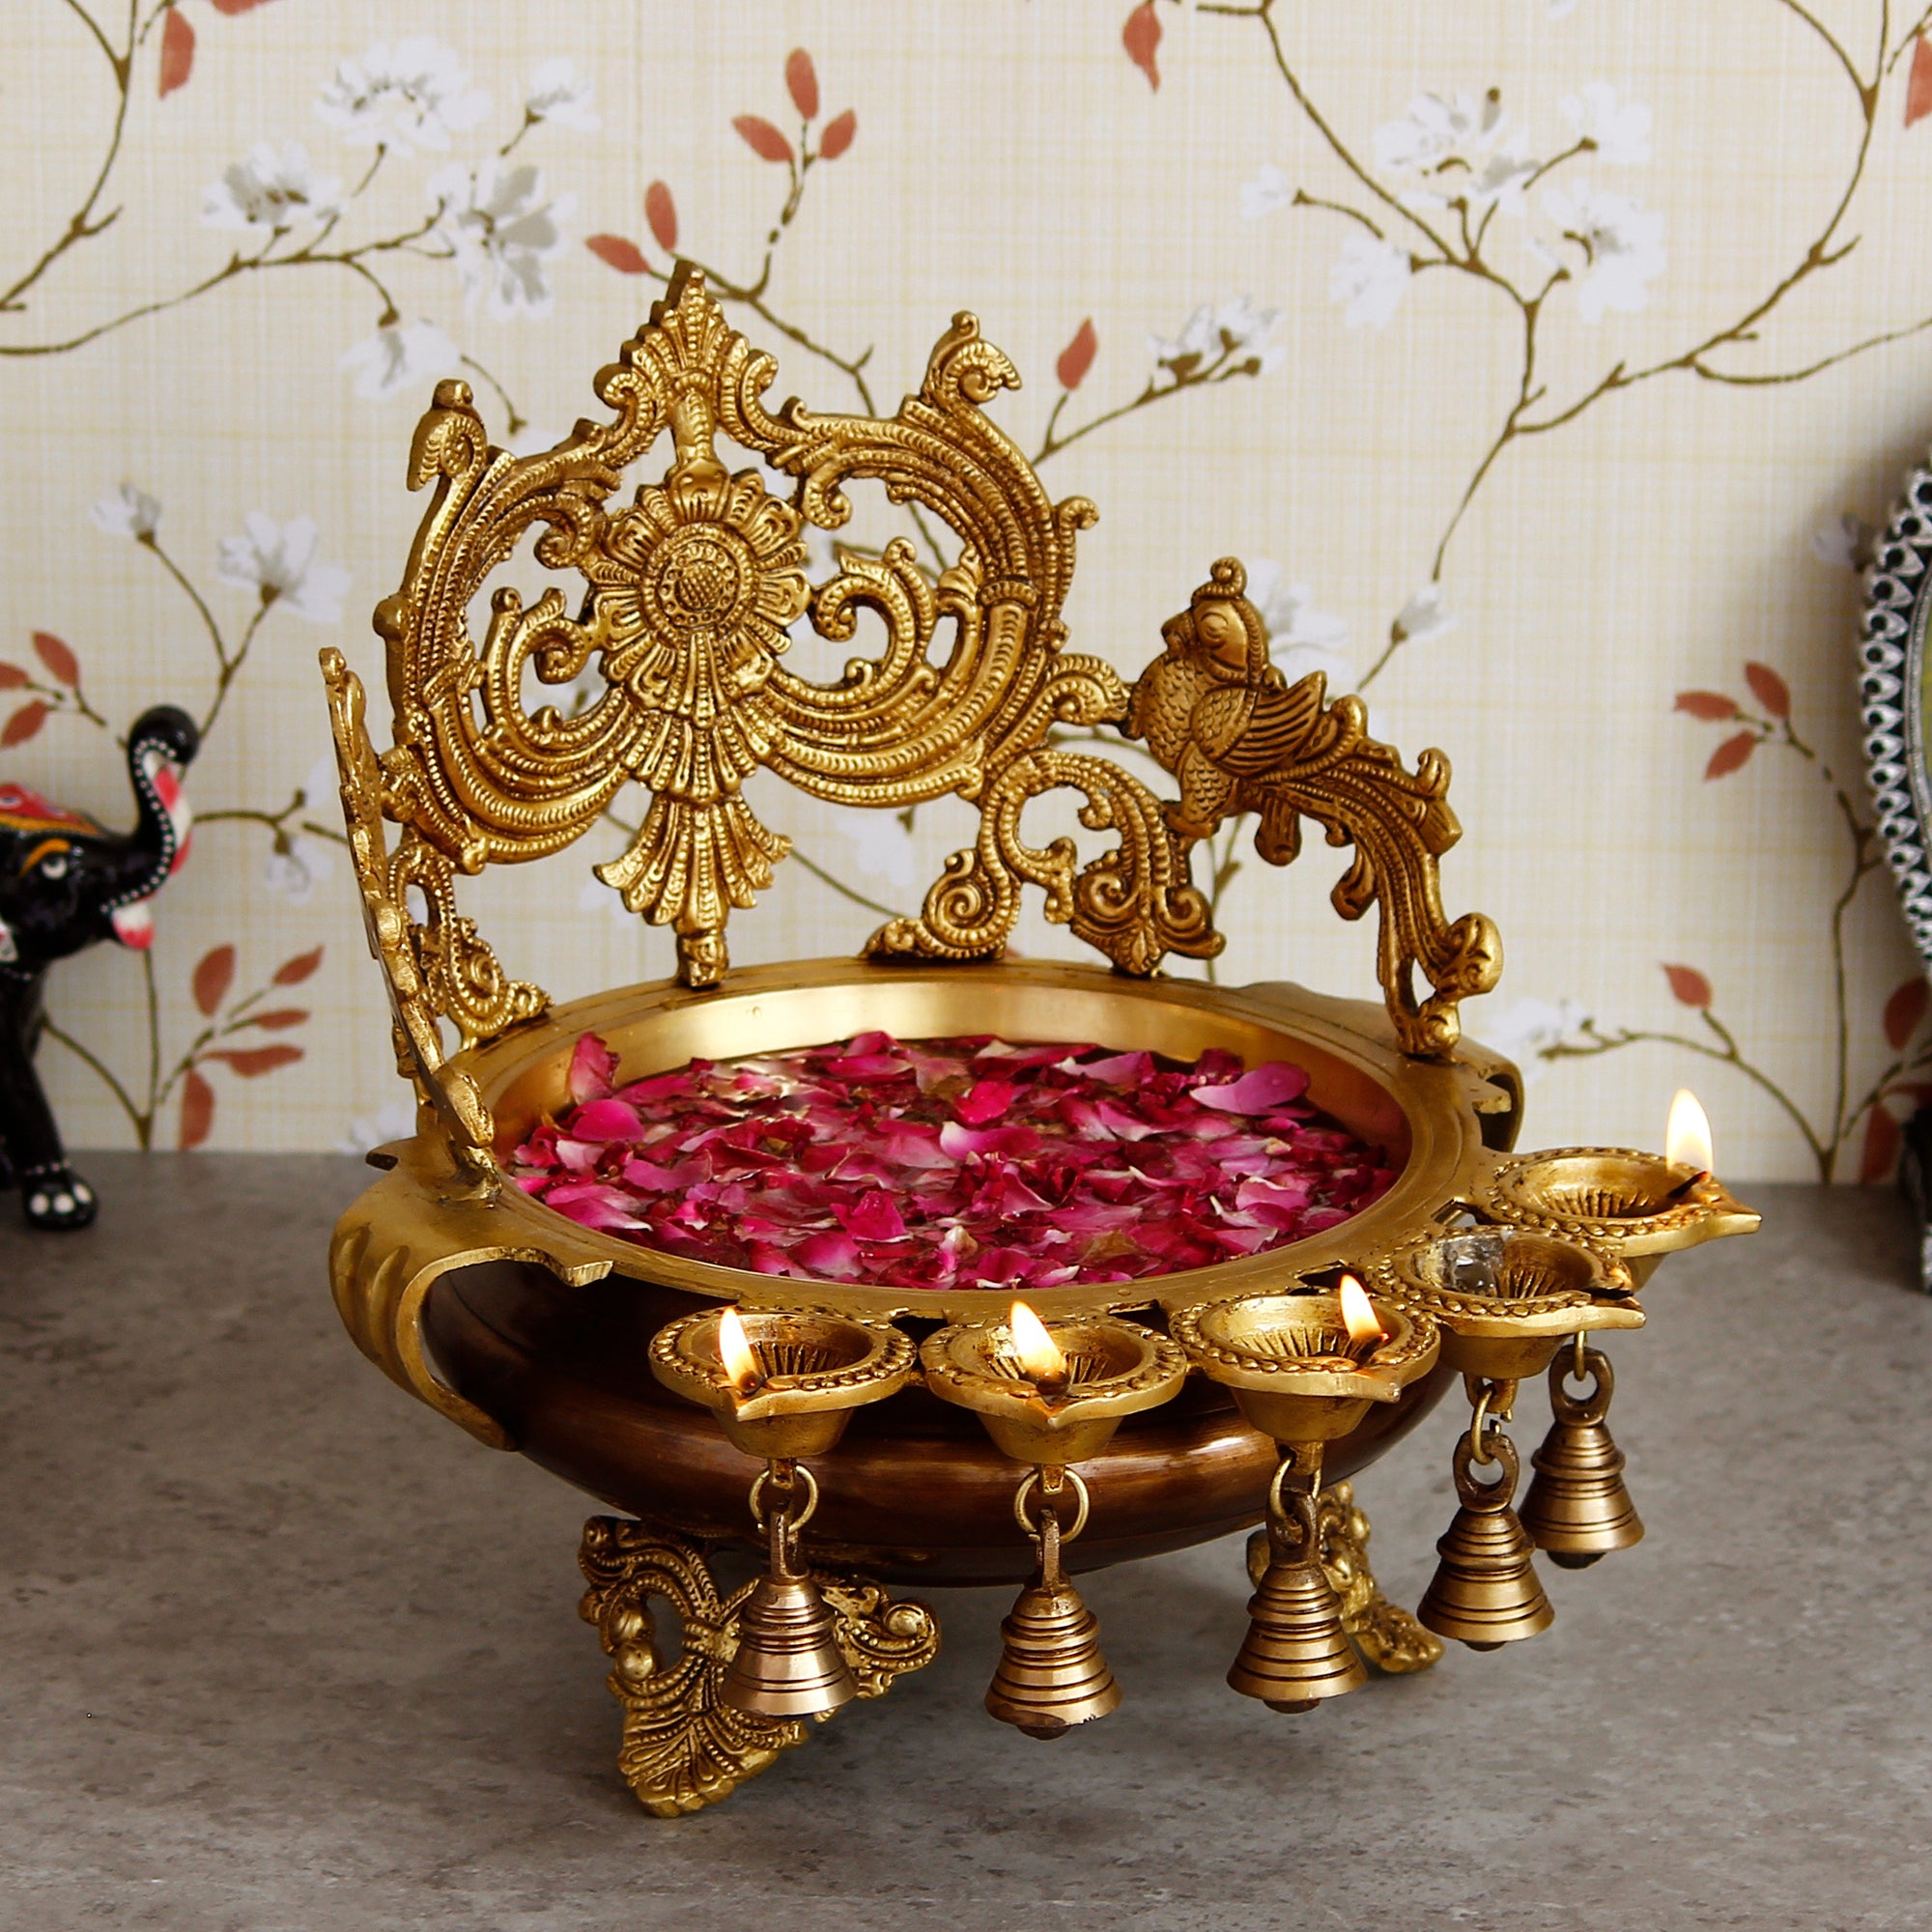 Premium Golden Decorative Handcrafted Ethnic Brass Urli bowl With Bells and 5 Diya's